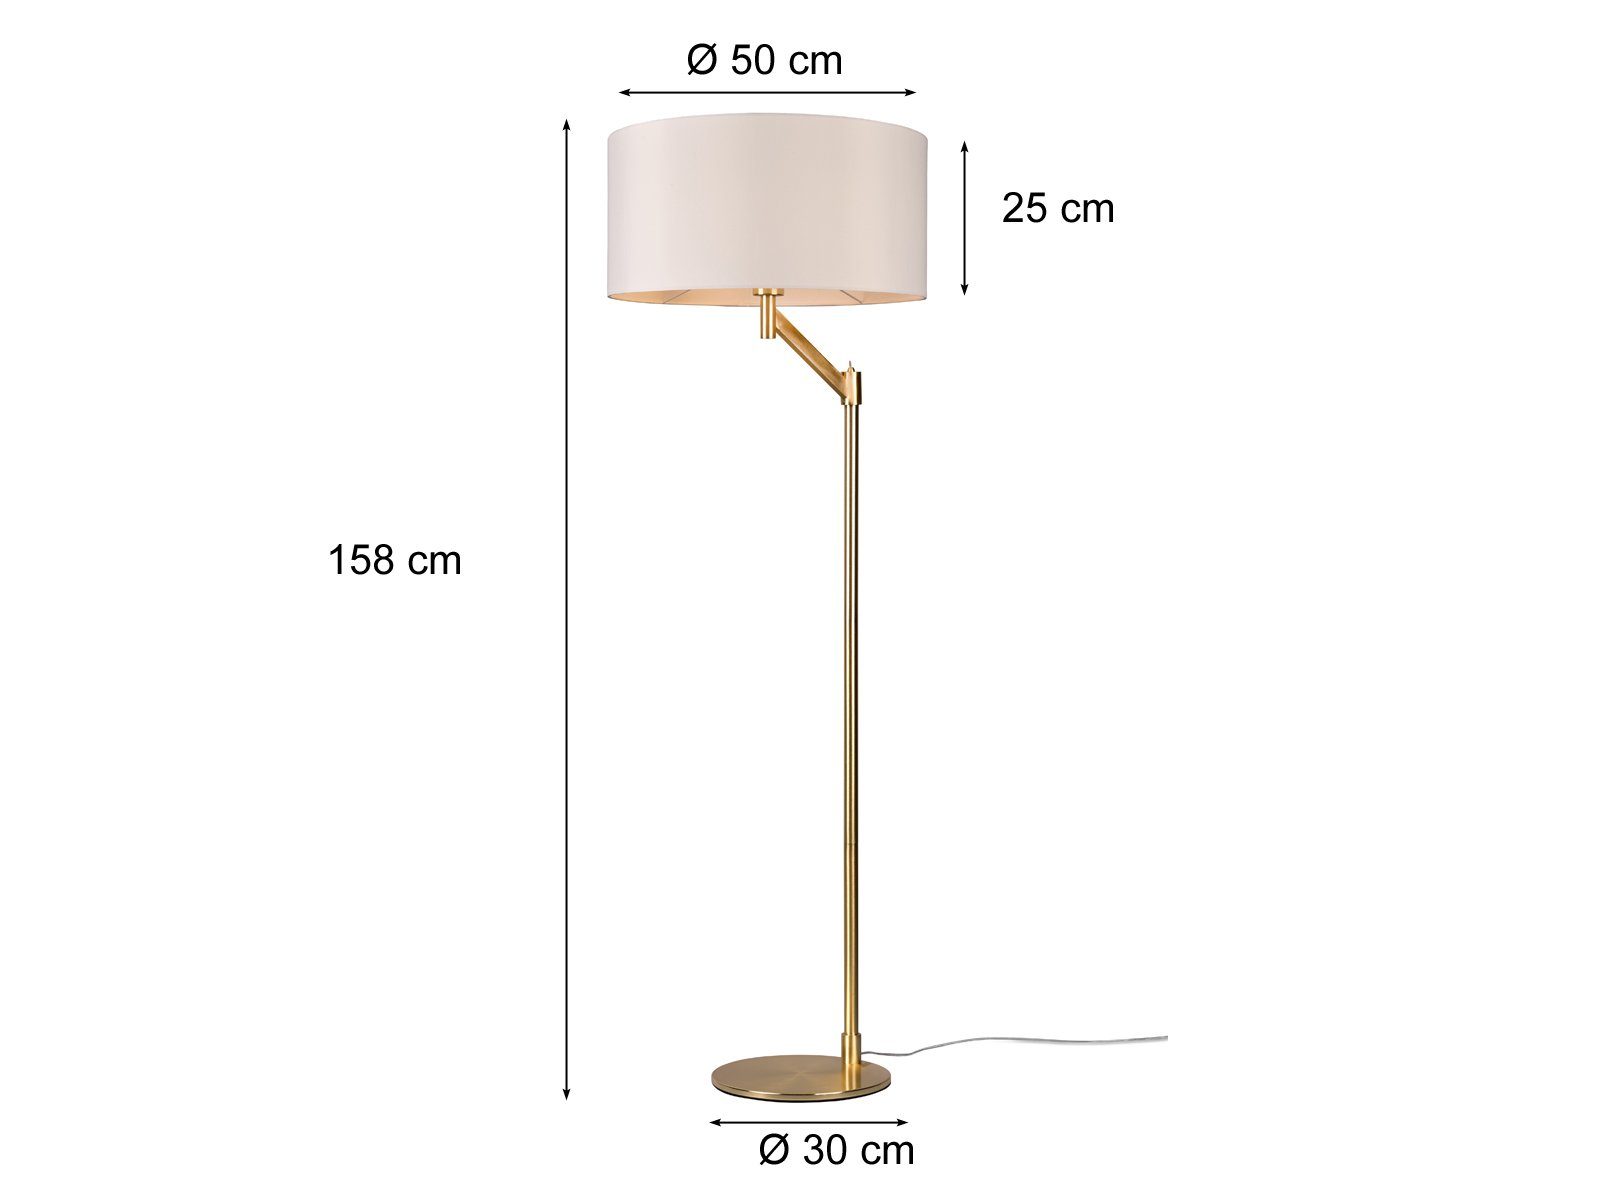 LED Messing matt LED Weiß Höhe wechselbar, Warmweiß, 158cm / Design-klassiker groß, meineWunschleuchte Bauhaus Lampenschirm-e Gold-en Stoff Stehlampe,